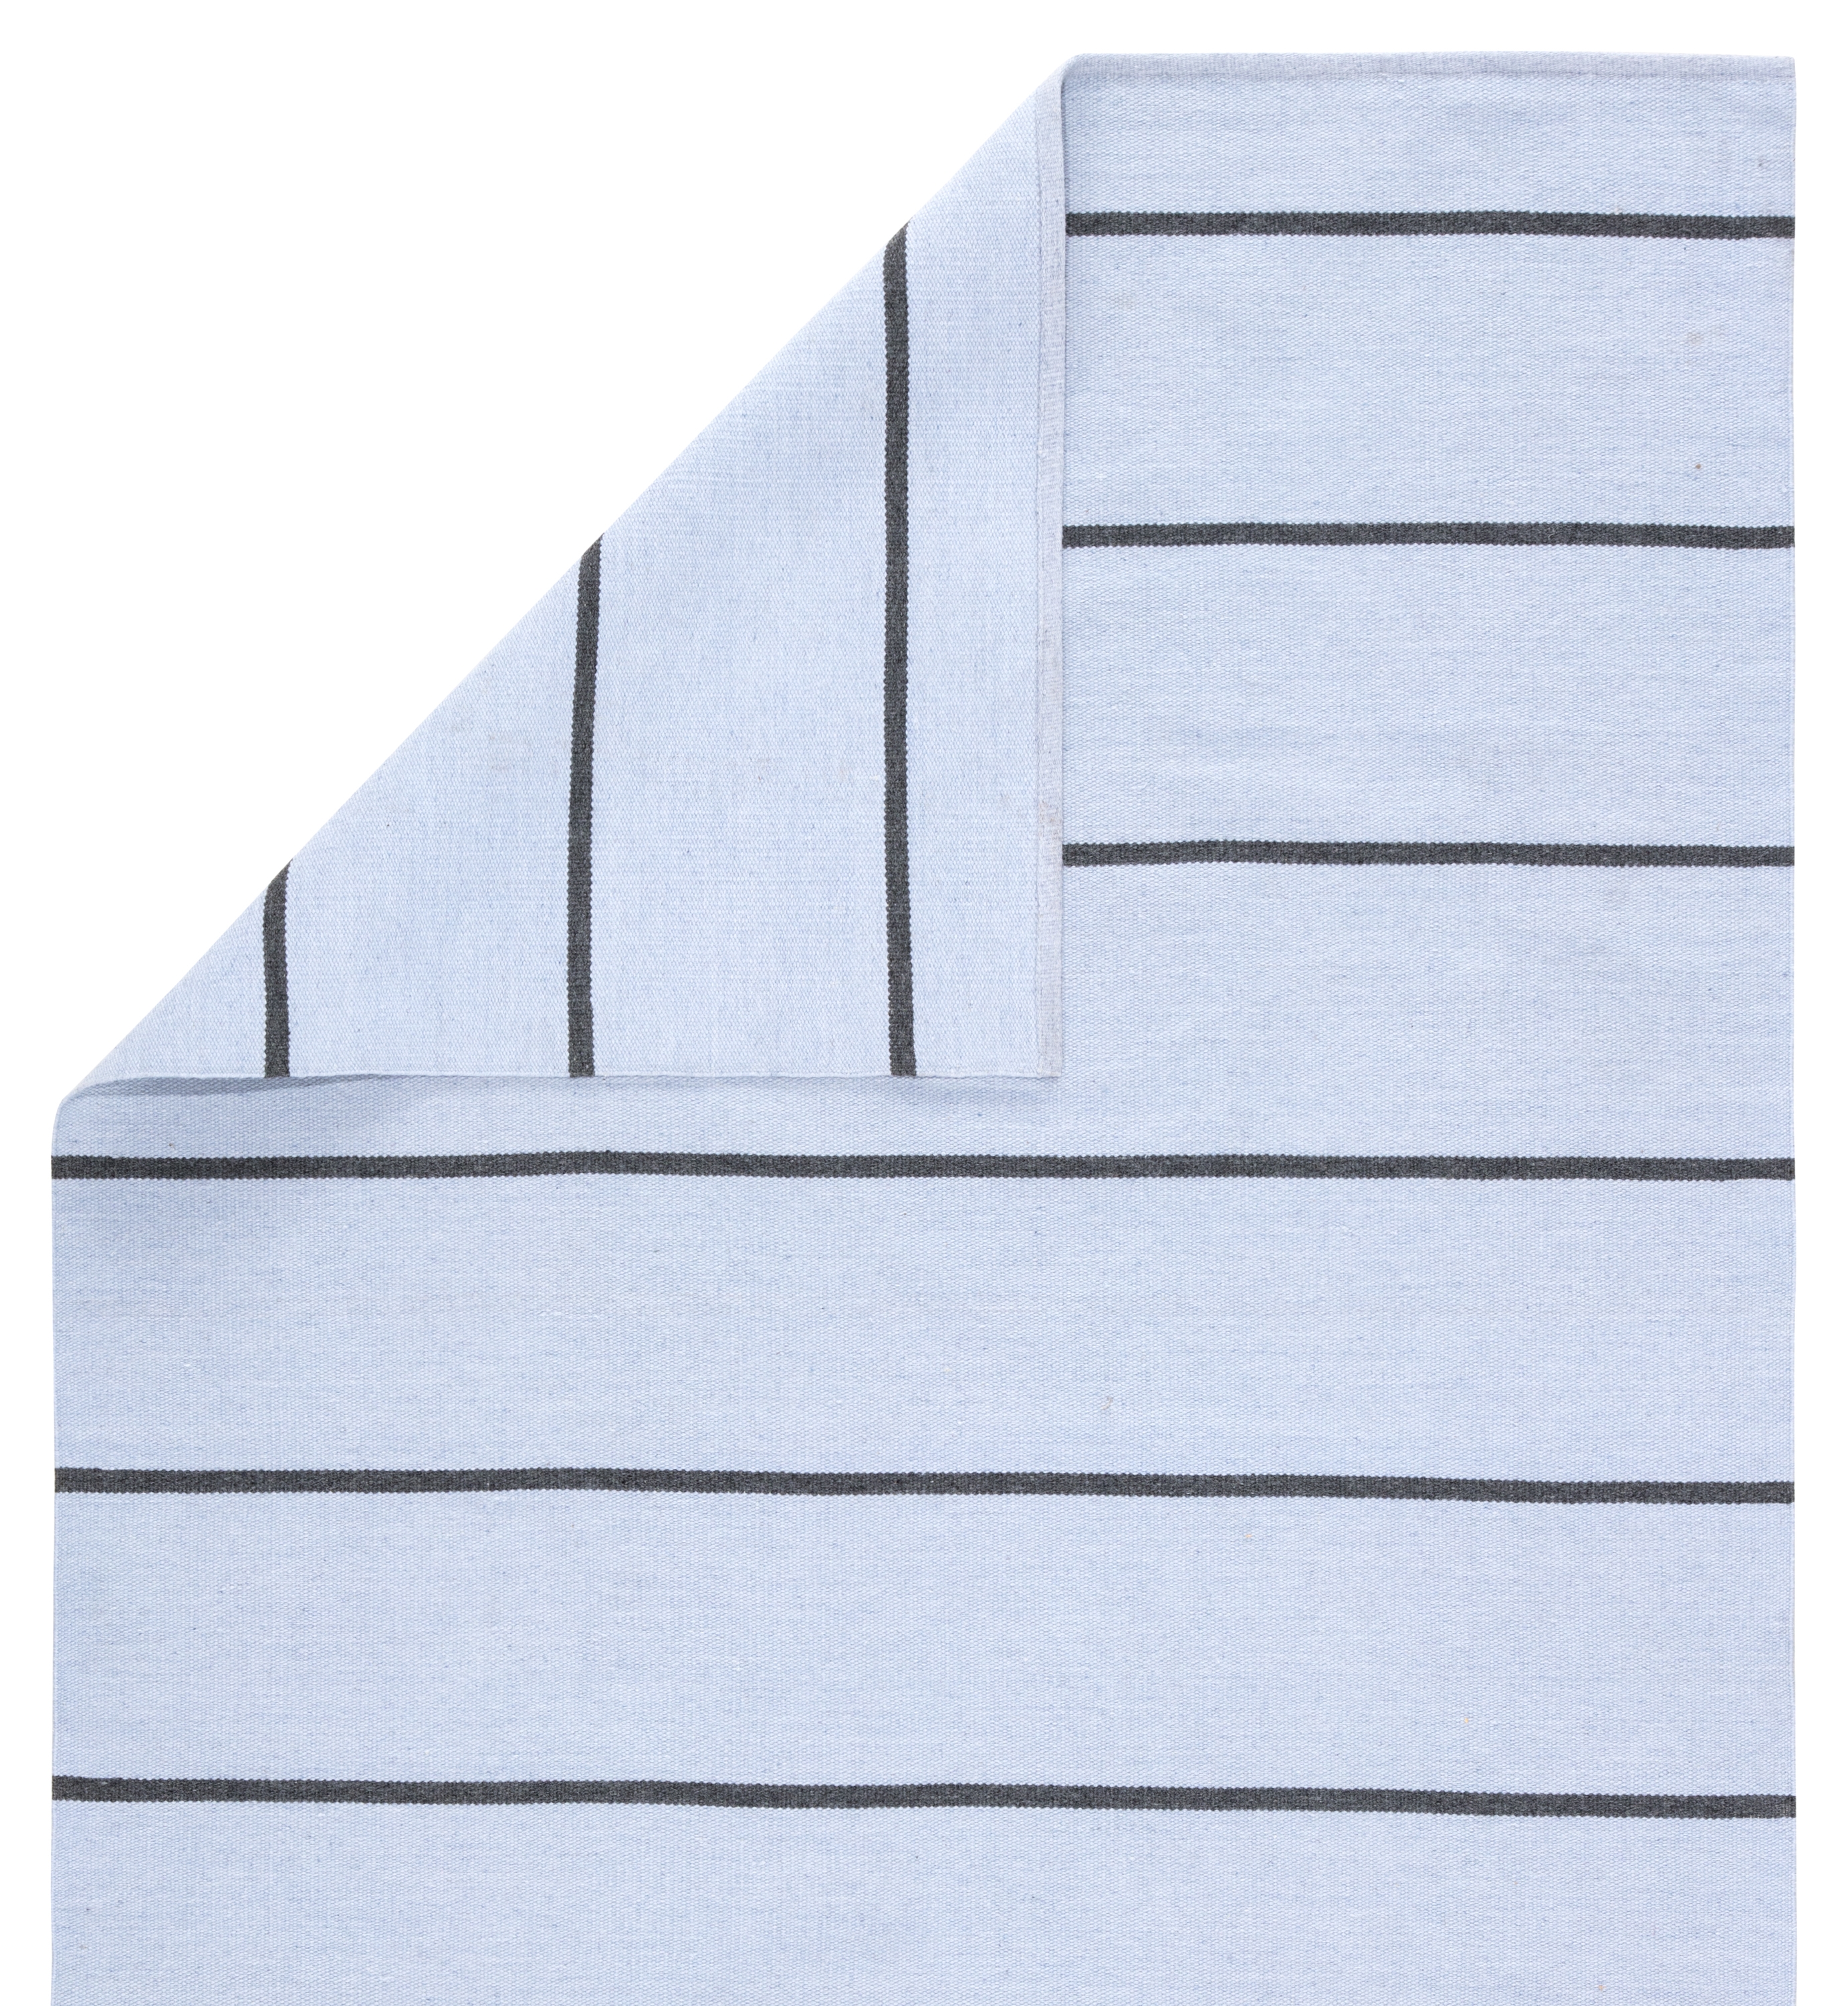 Corbina Indoor/Outdoor Stripe Area Rug, Light Blue & Gray, 5' x 8' - Image 2